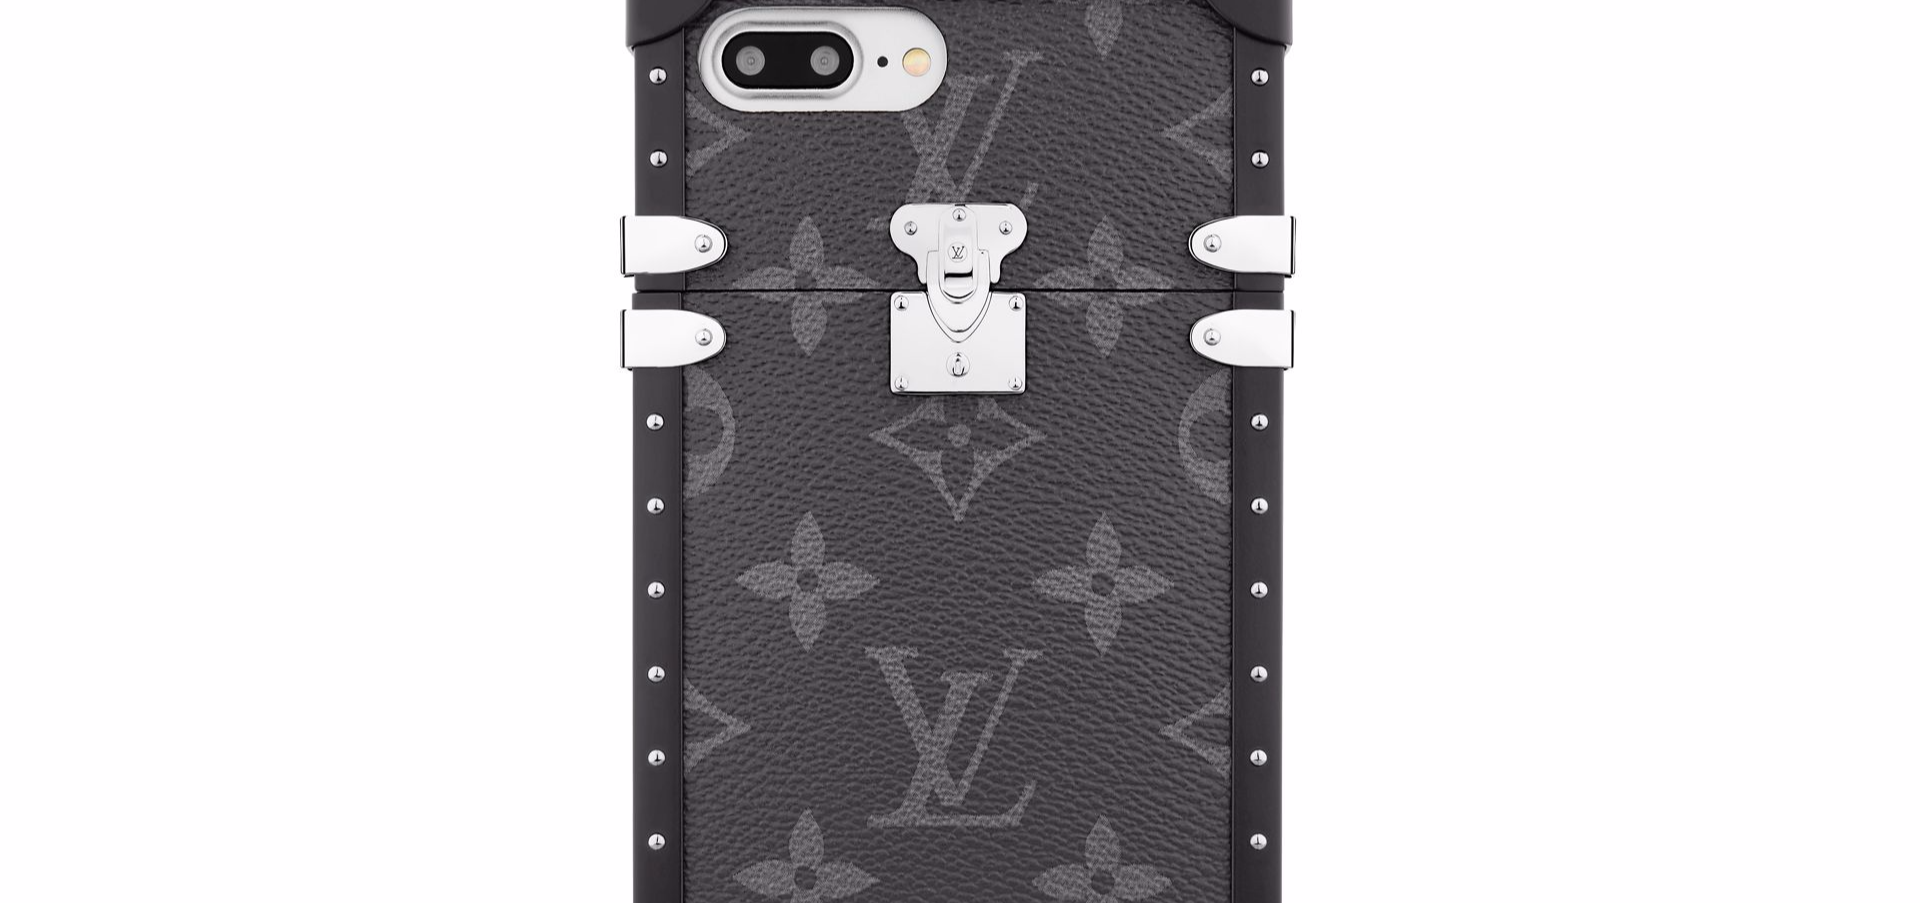 Louis Vuitton x Supreme Trunk Iphone 7 plus Phone Case, Mobile